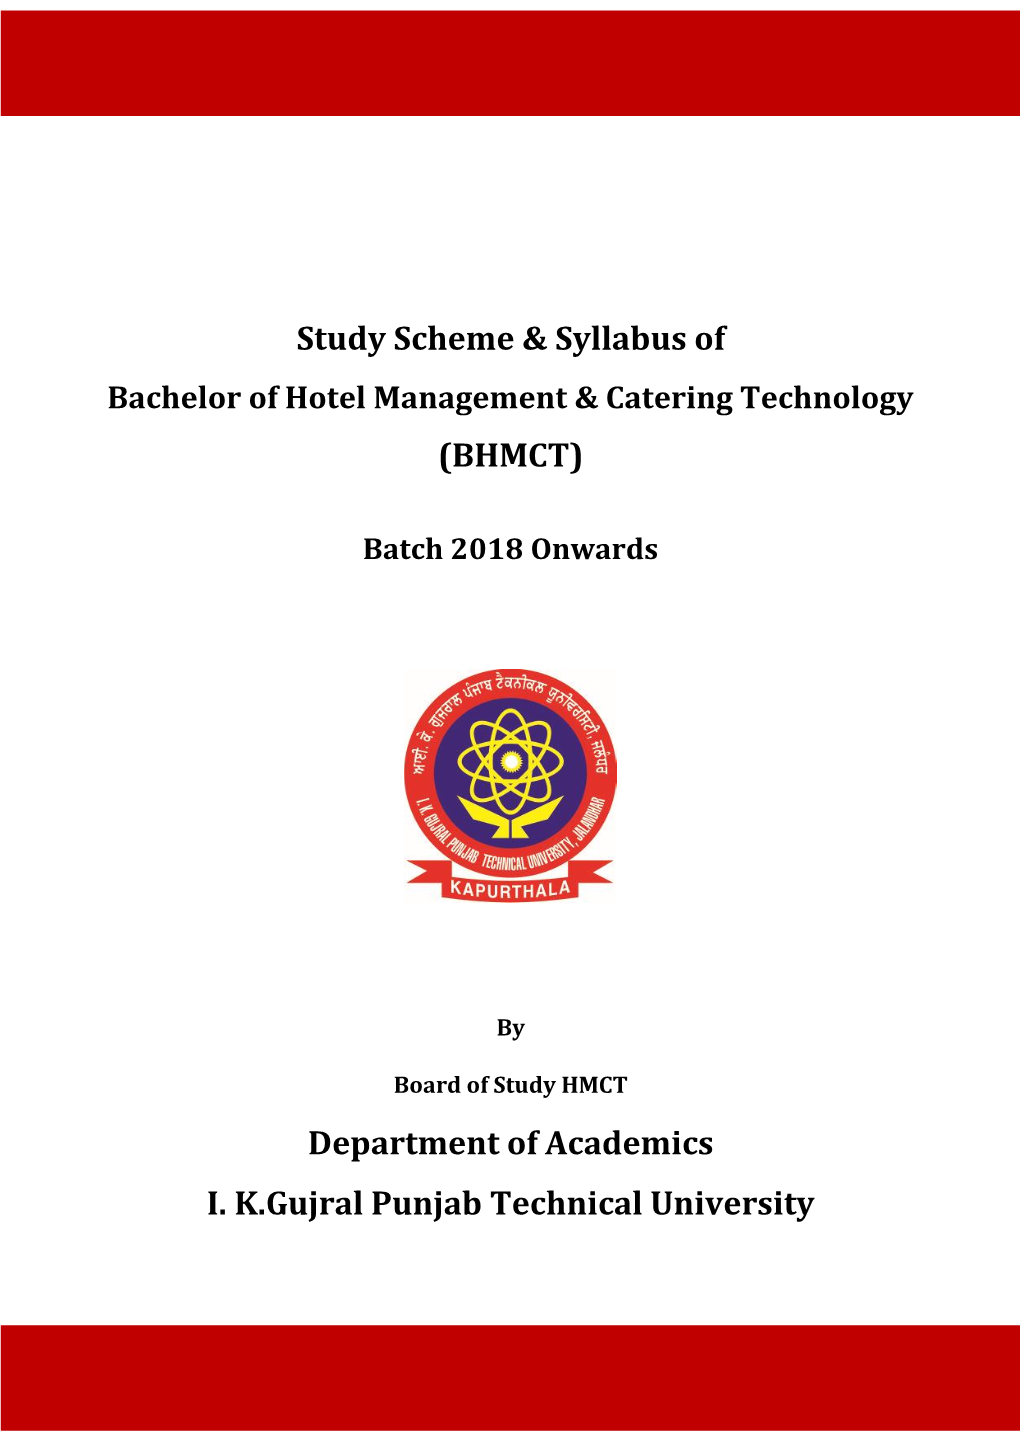 Study Scheme & Syllabus of (BHMCT)